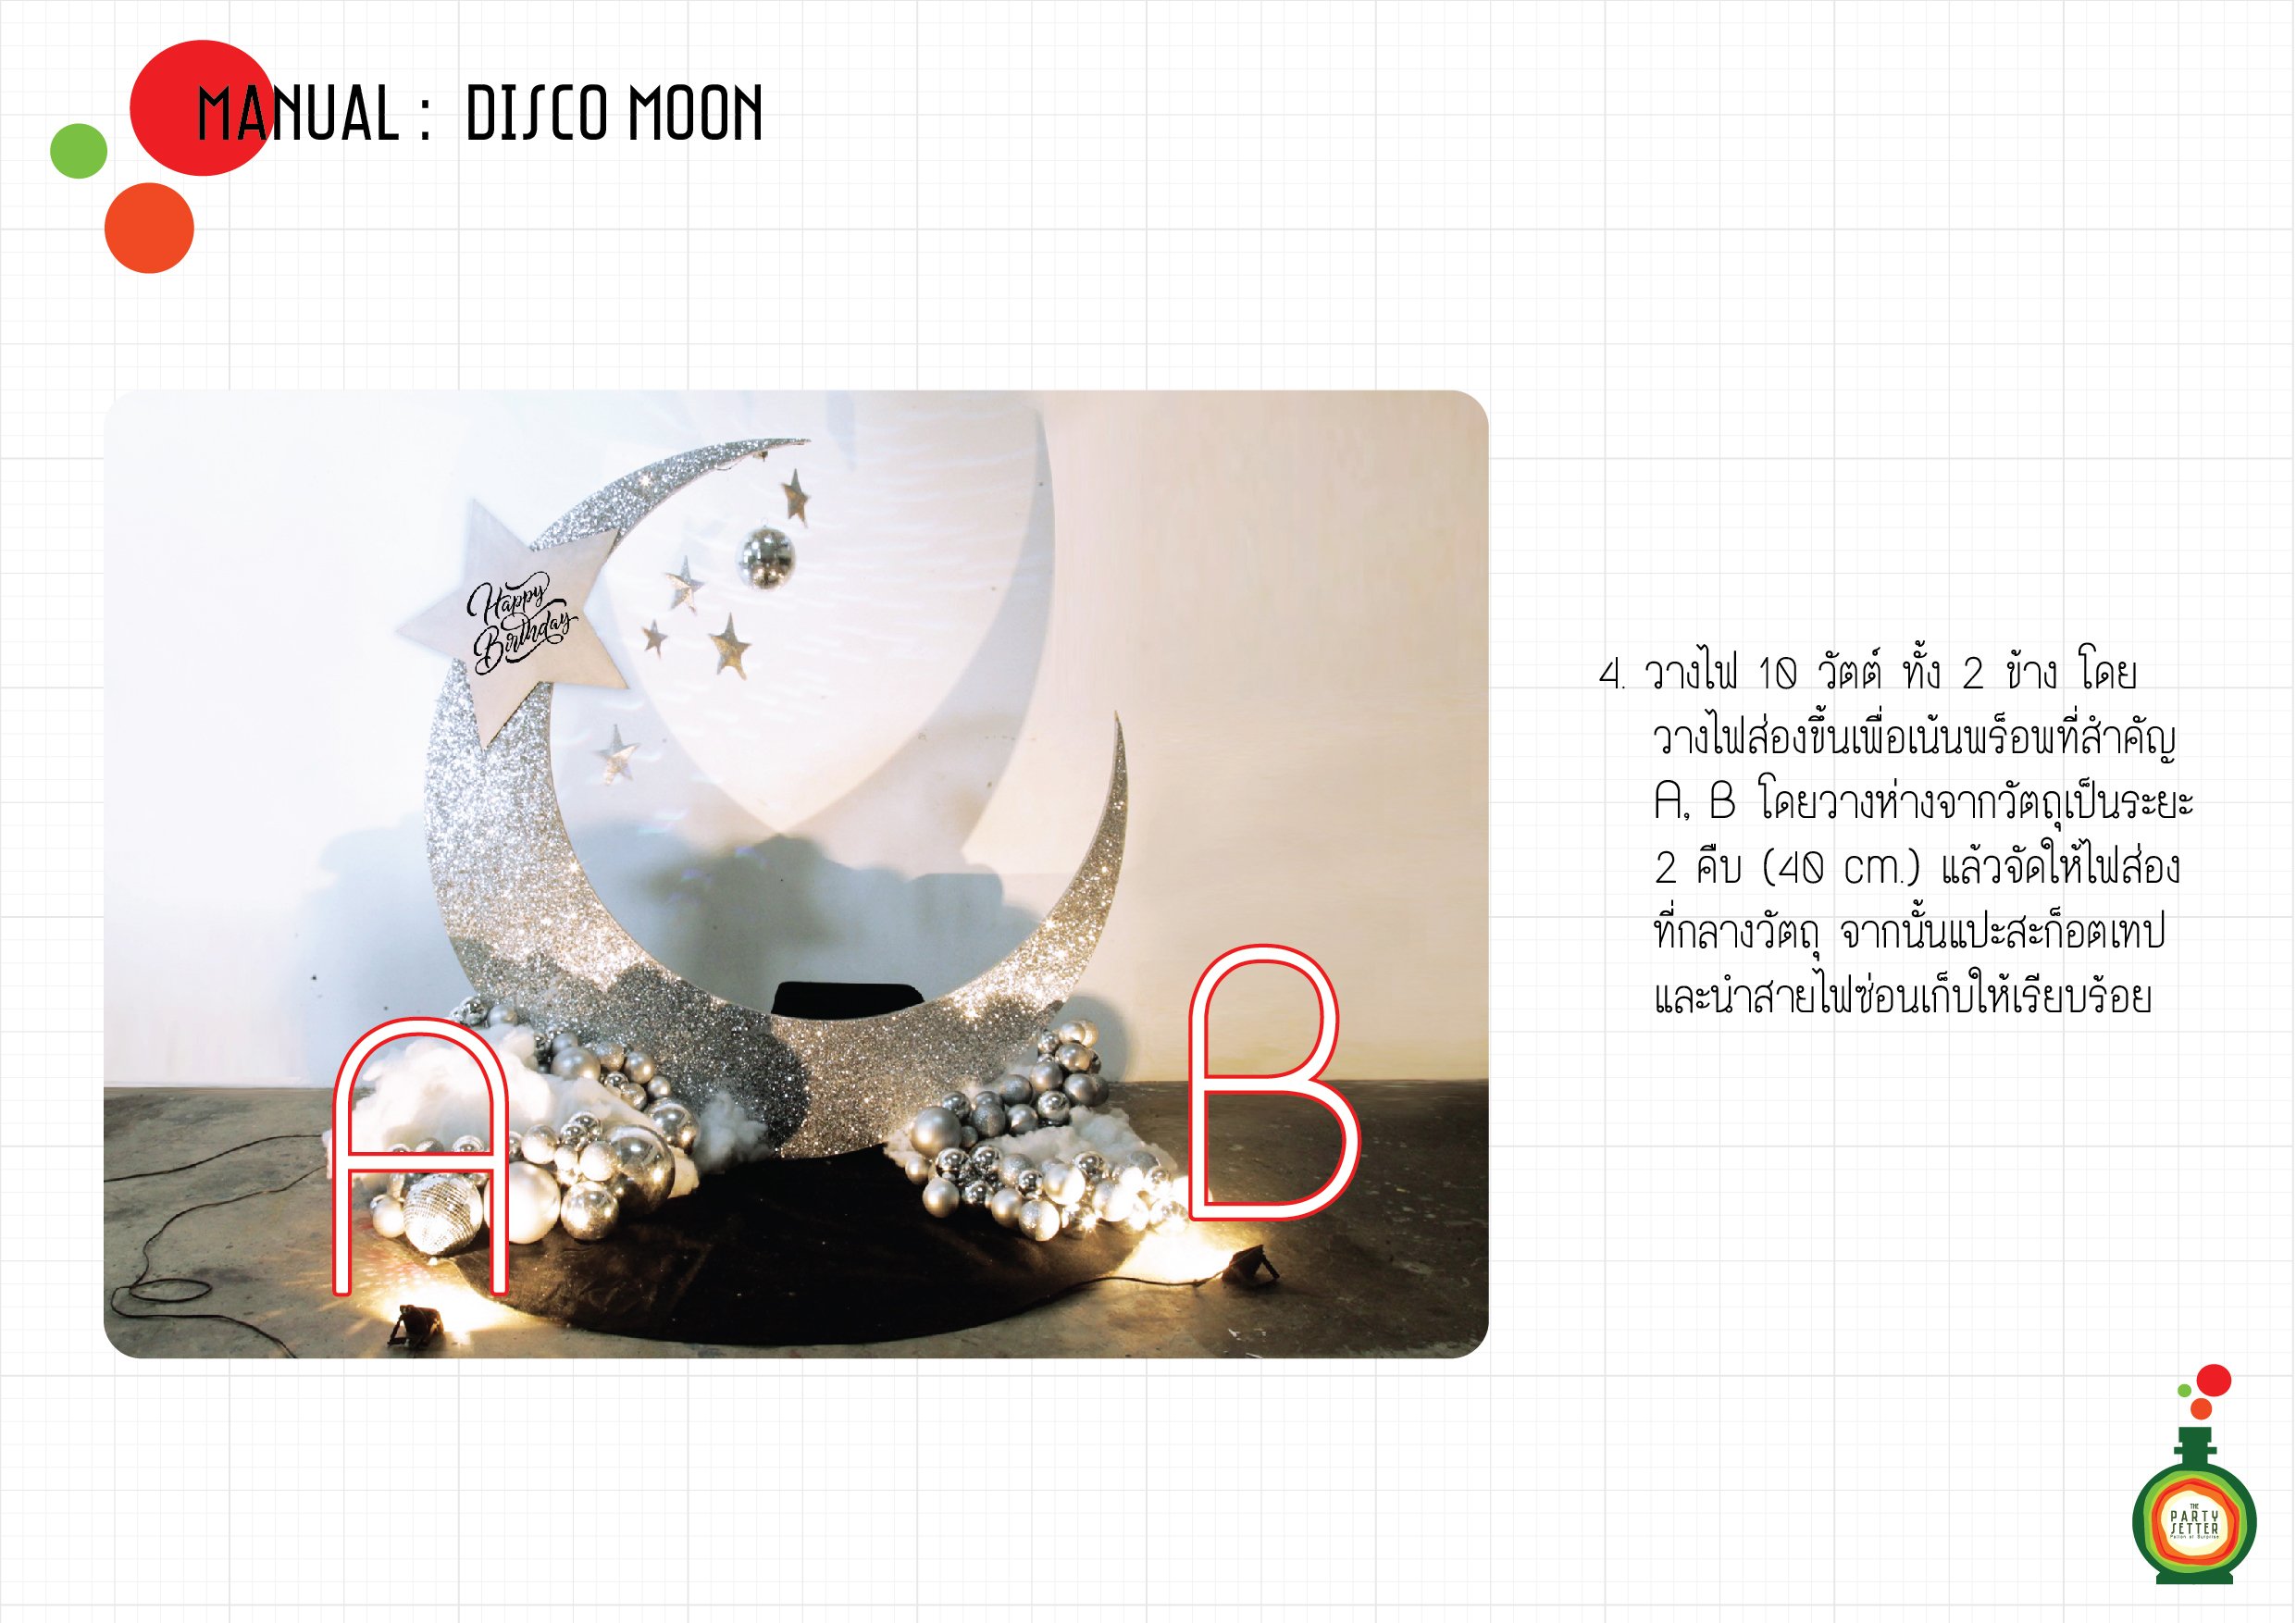 Manual_Disco Moon-04-01.jpg